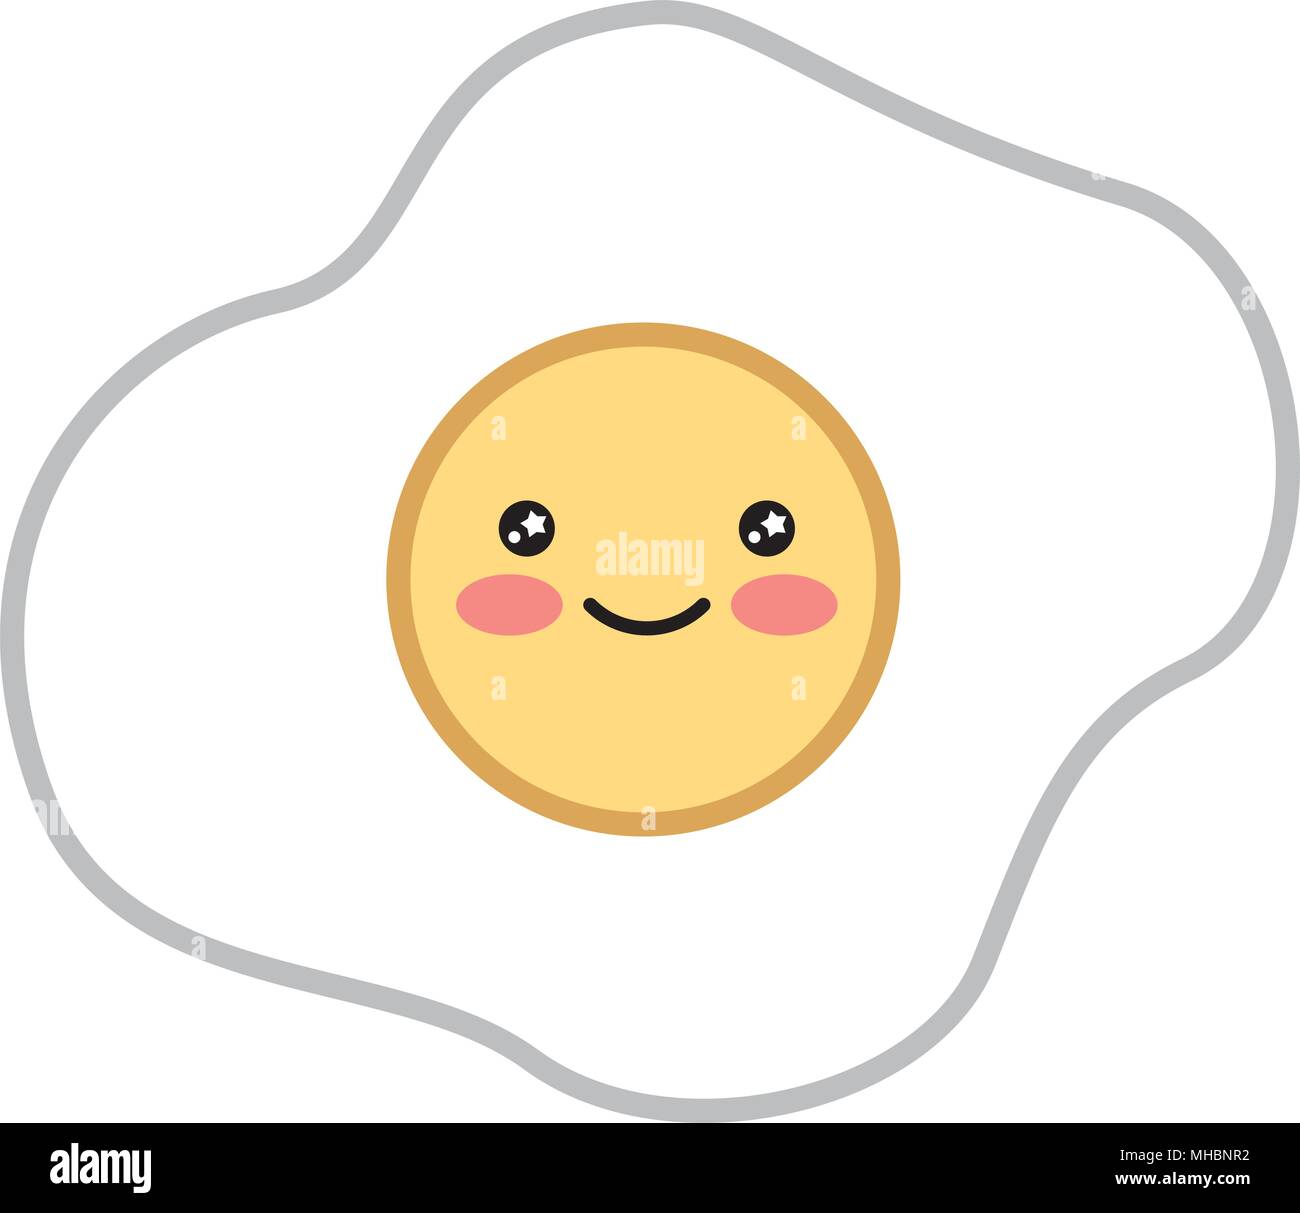 Kawaii huevo frito alimentos cartoon ilustración vectorial Imagen Vector de  stock - Alamy